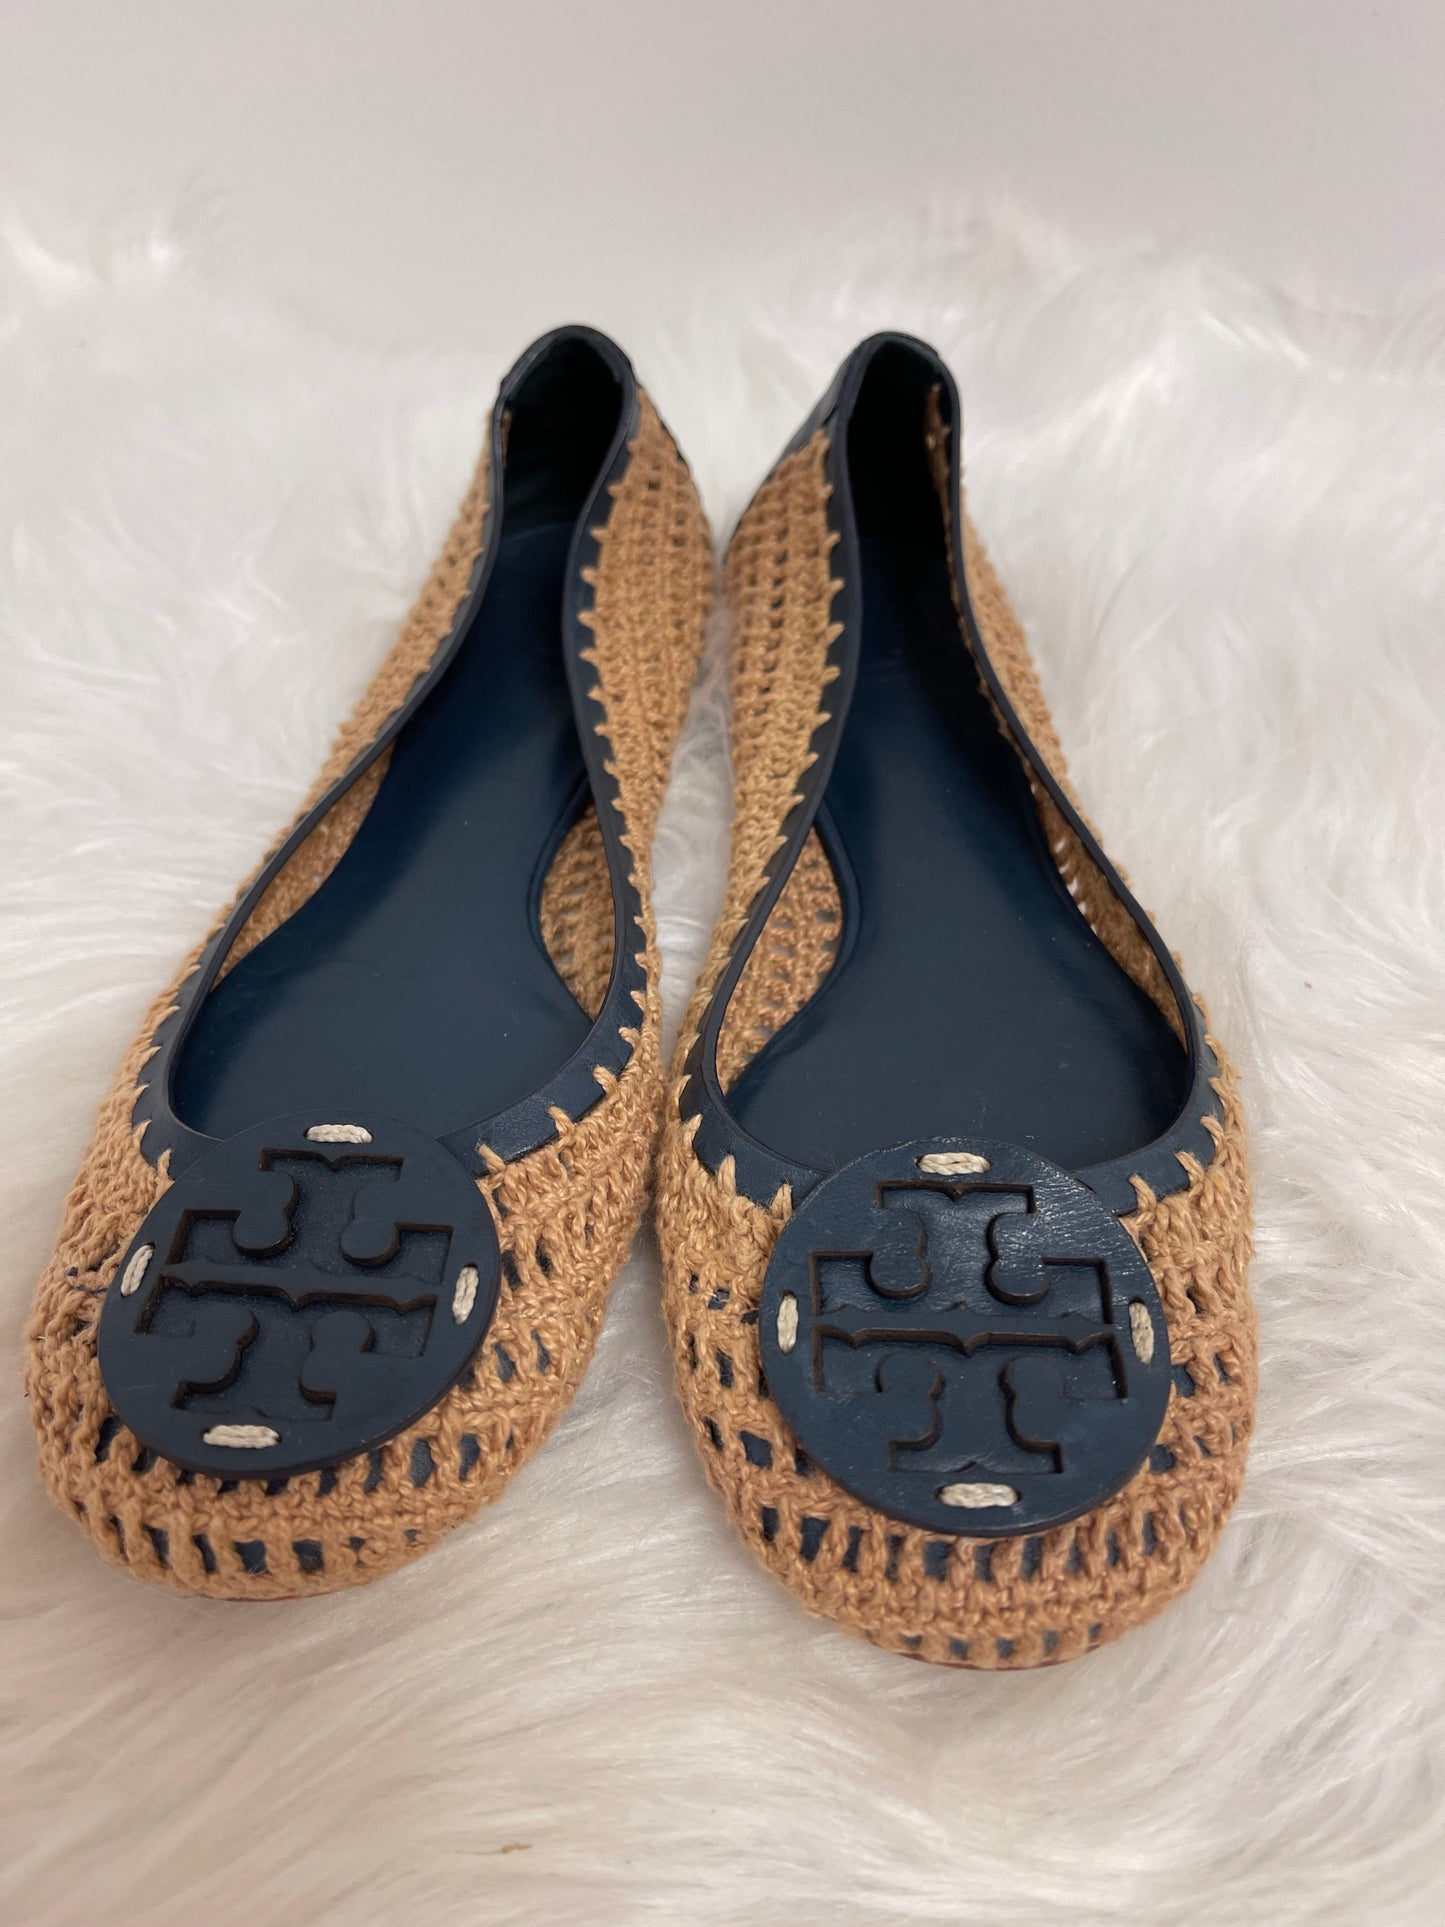 Blue & Cream Shoes Designer Tory Burch, Size 7